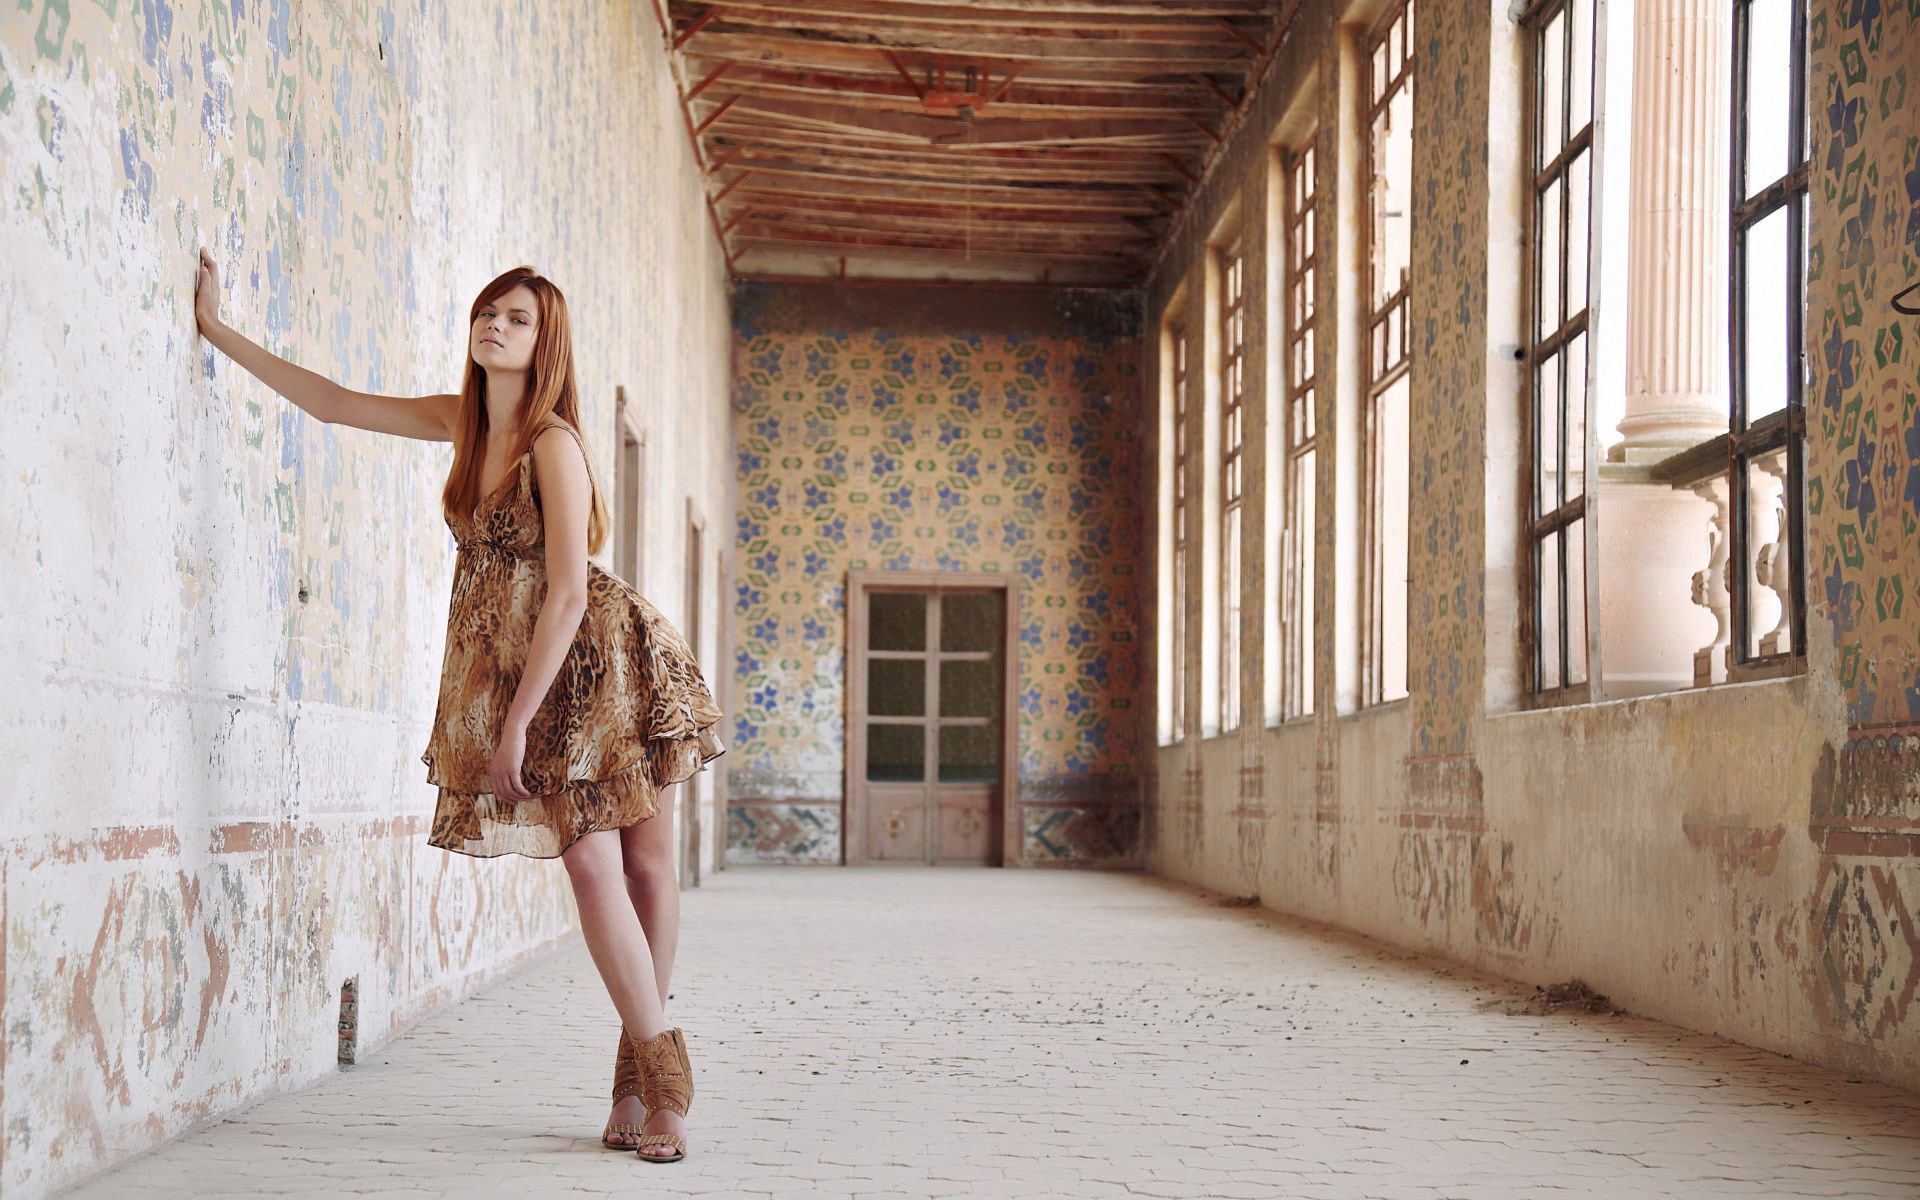 Girl In Abandoned Building Wallpaper